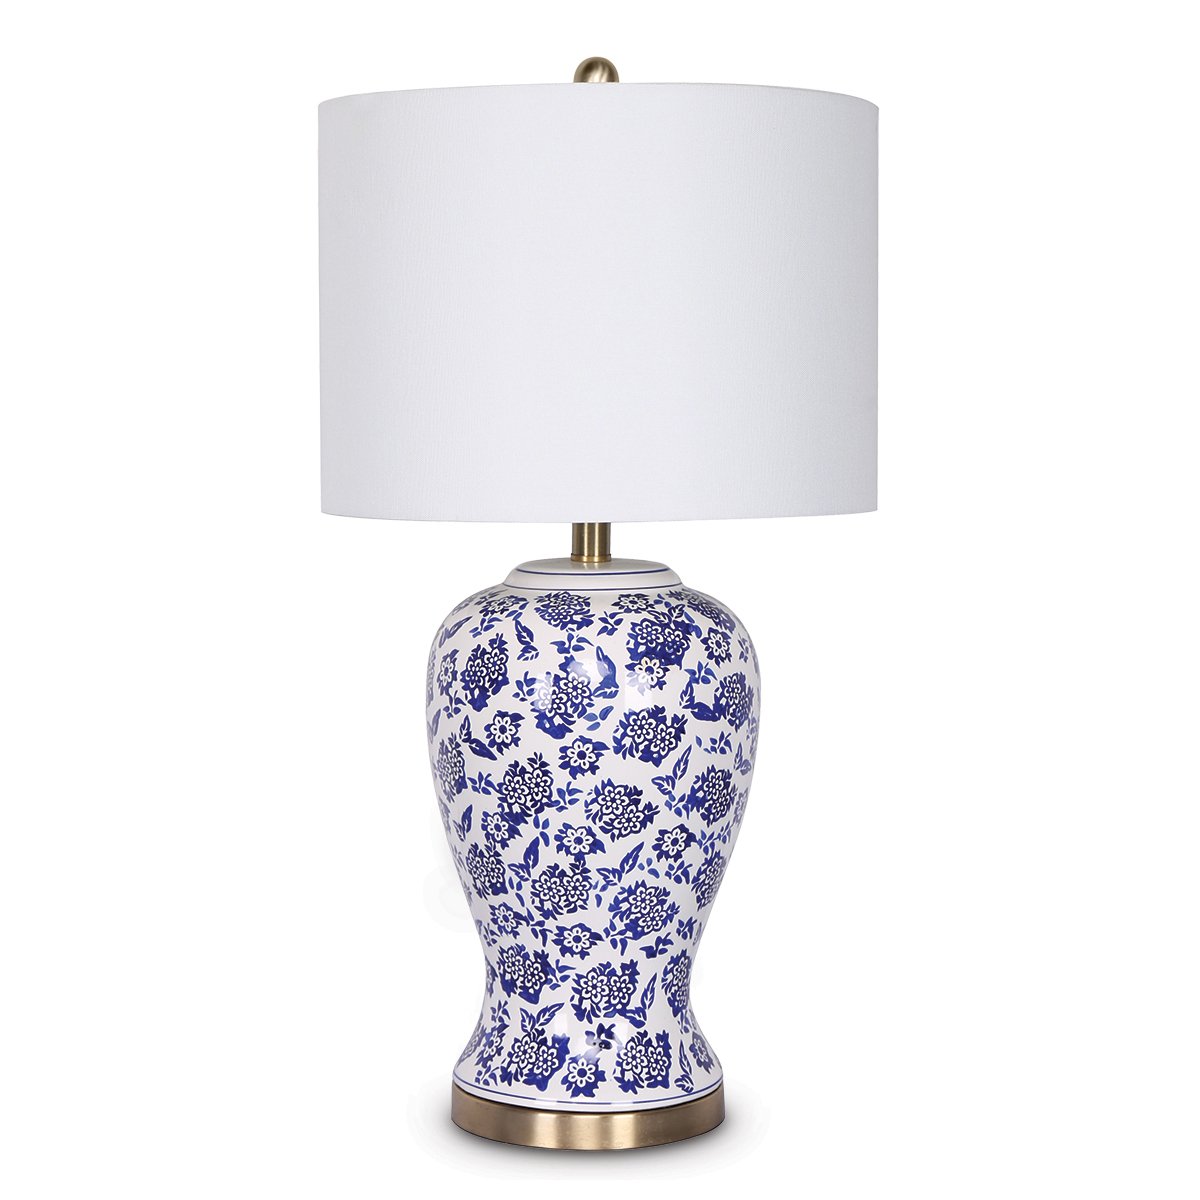 Sarantino Table Lamp Ceramic Floral Base Cotton Drum Shade 1